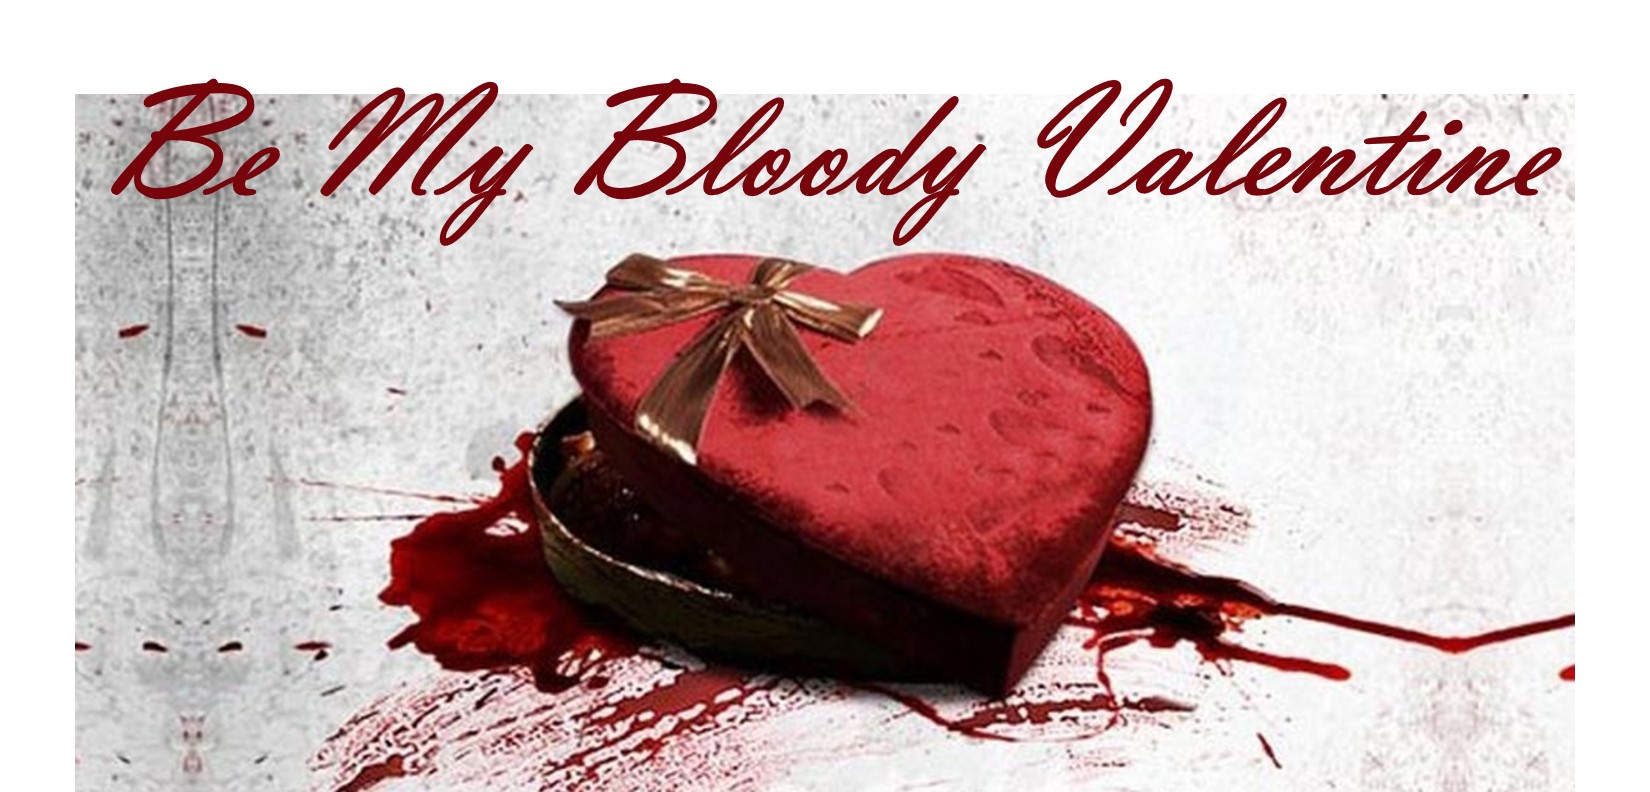 Be My Bloody Valentine